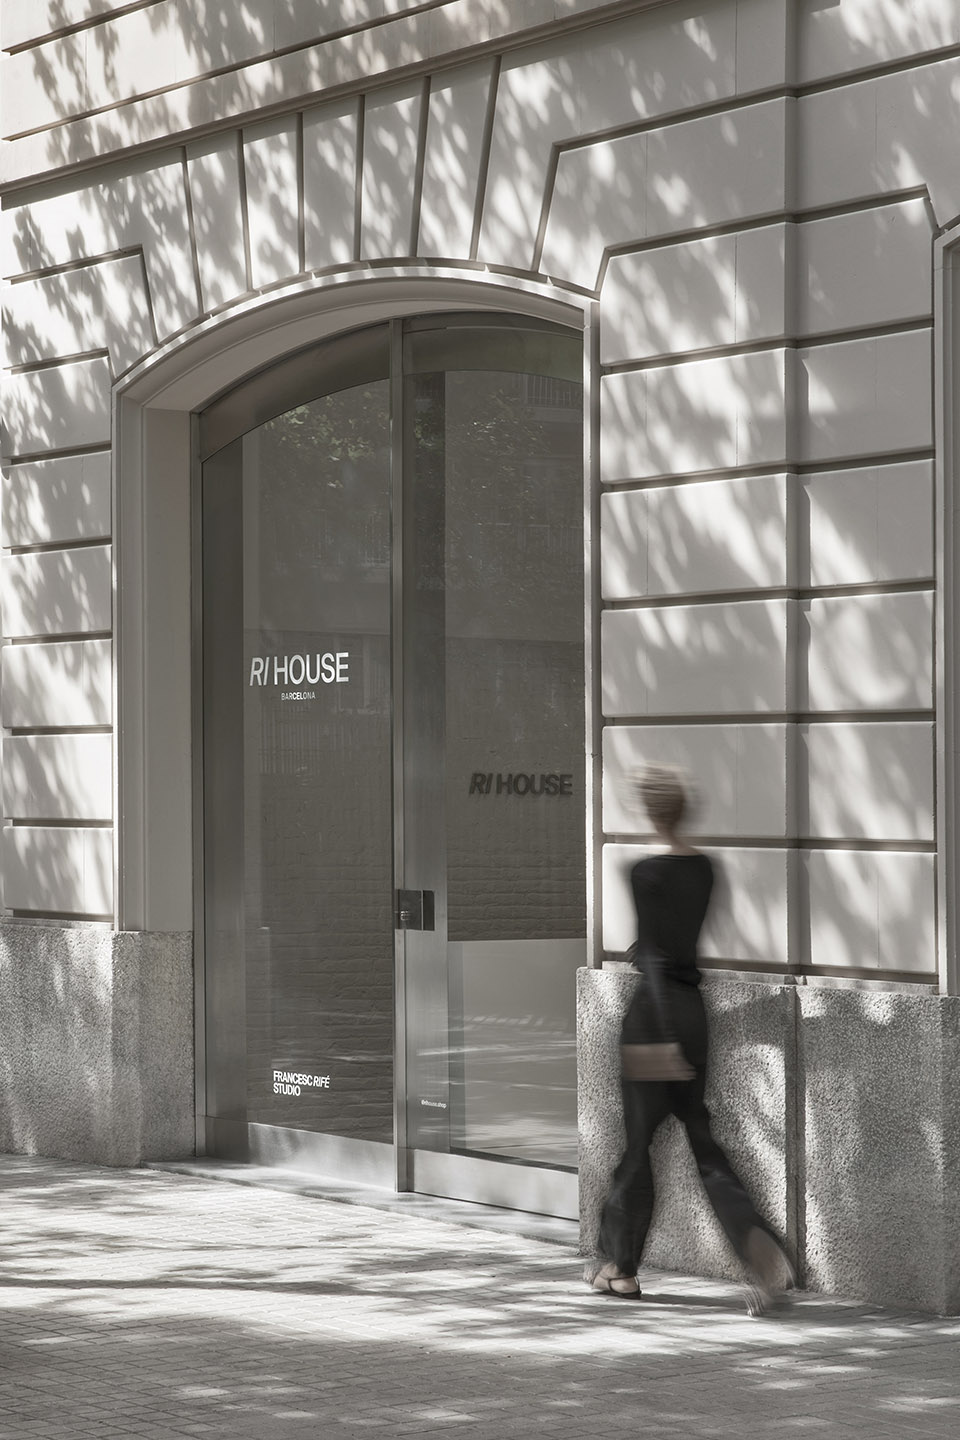 RI HOUSE家居展厅，巴塞罗那/当代艺术画廊的空间形式结合家庭空间元素-2